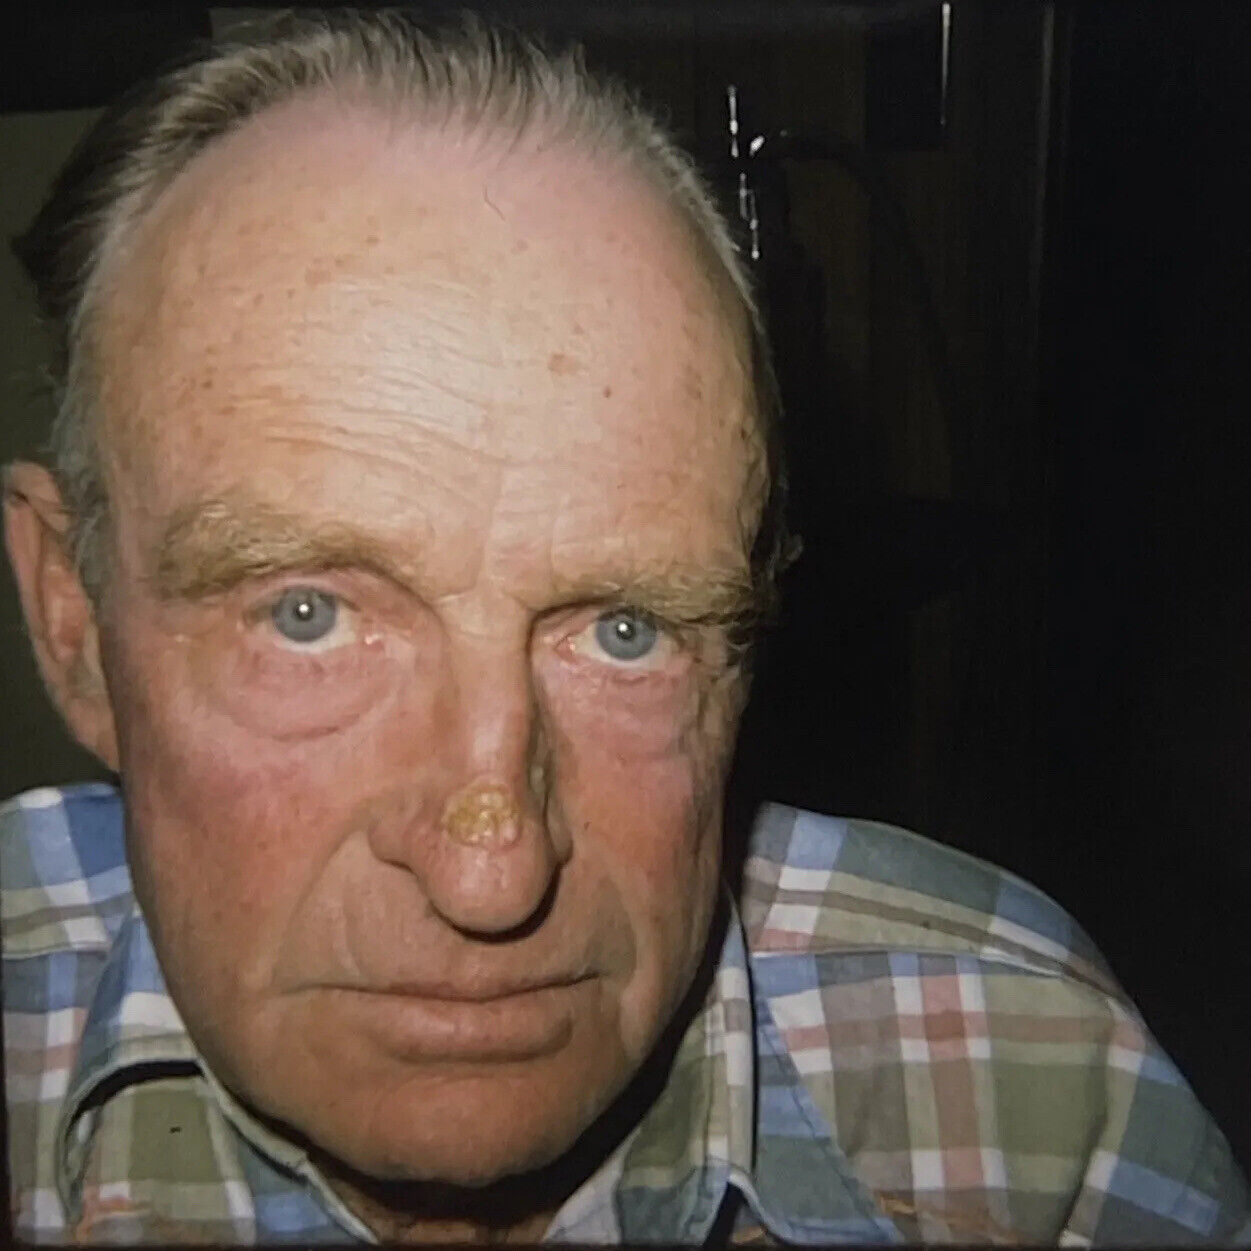 Vintage Photo Slide 1975 Man Nose Pre Surgery